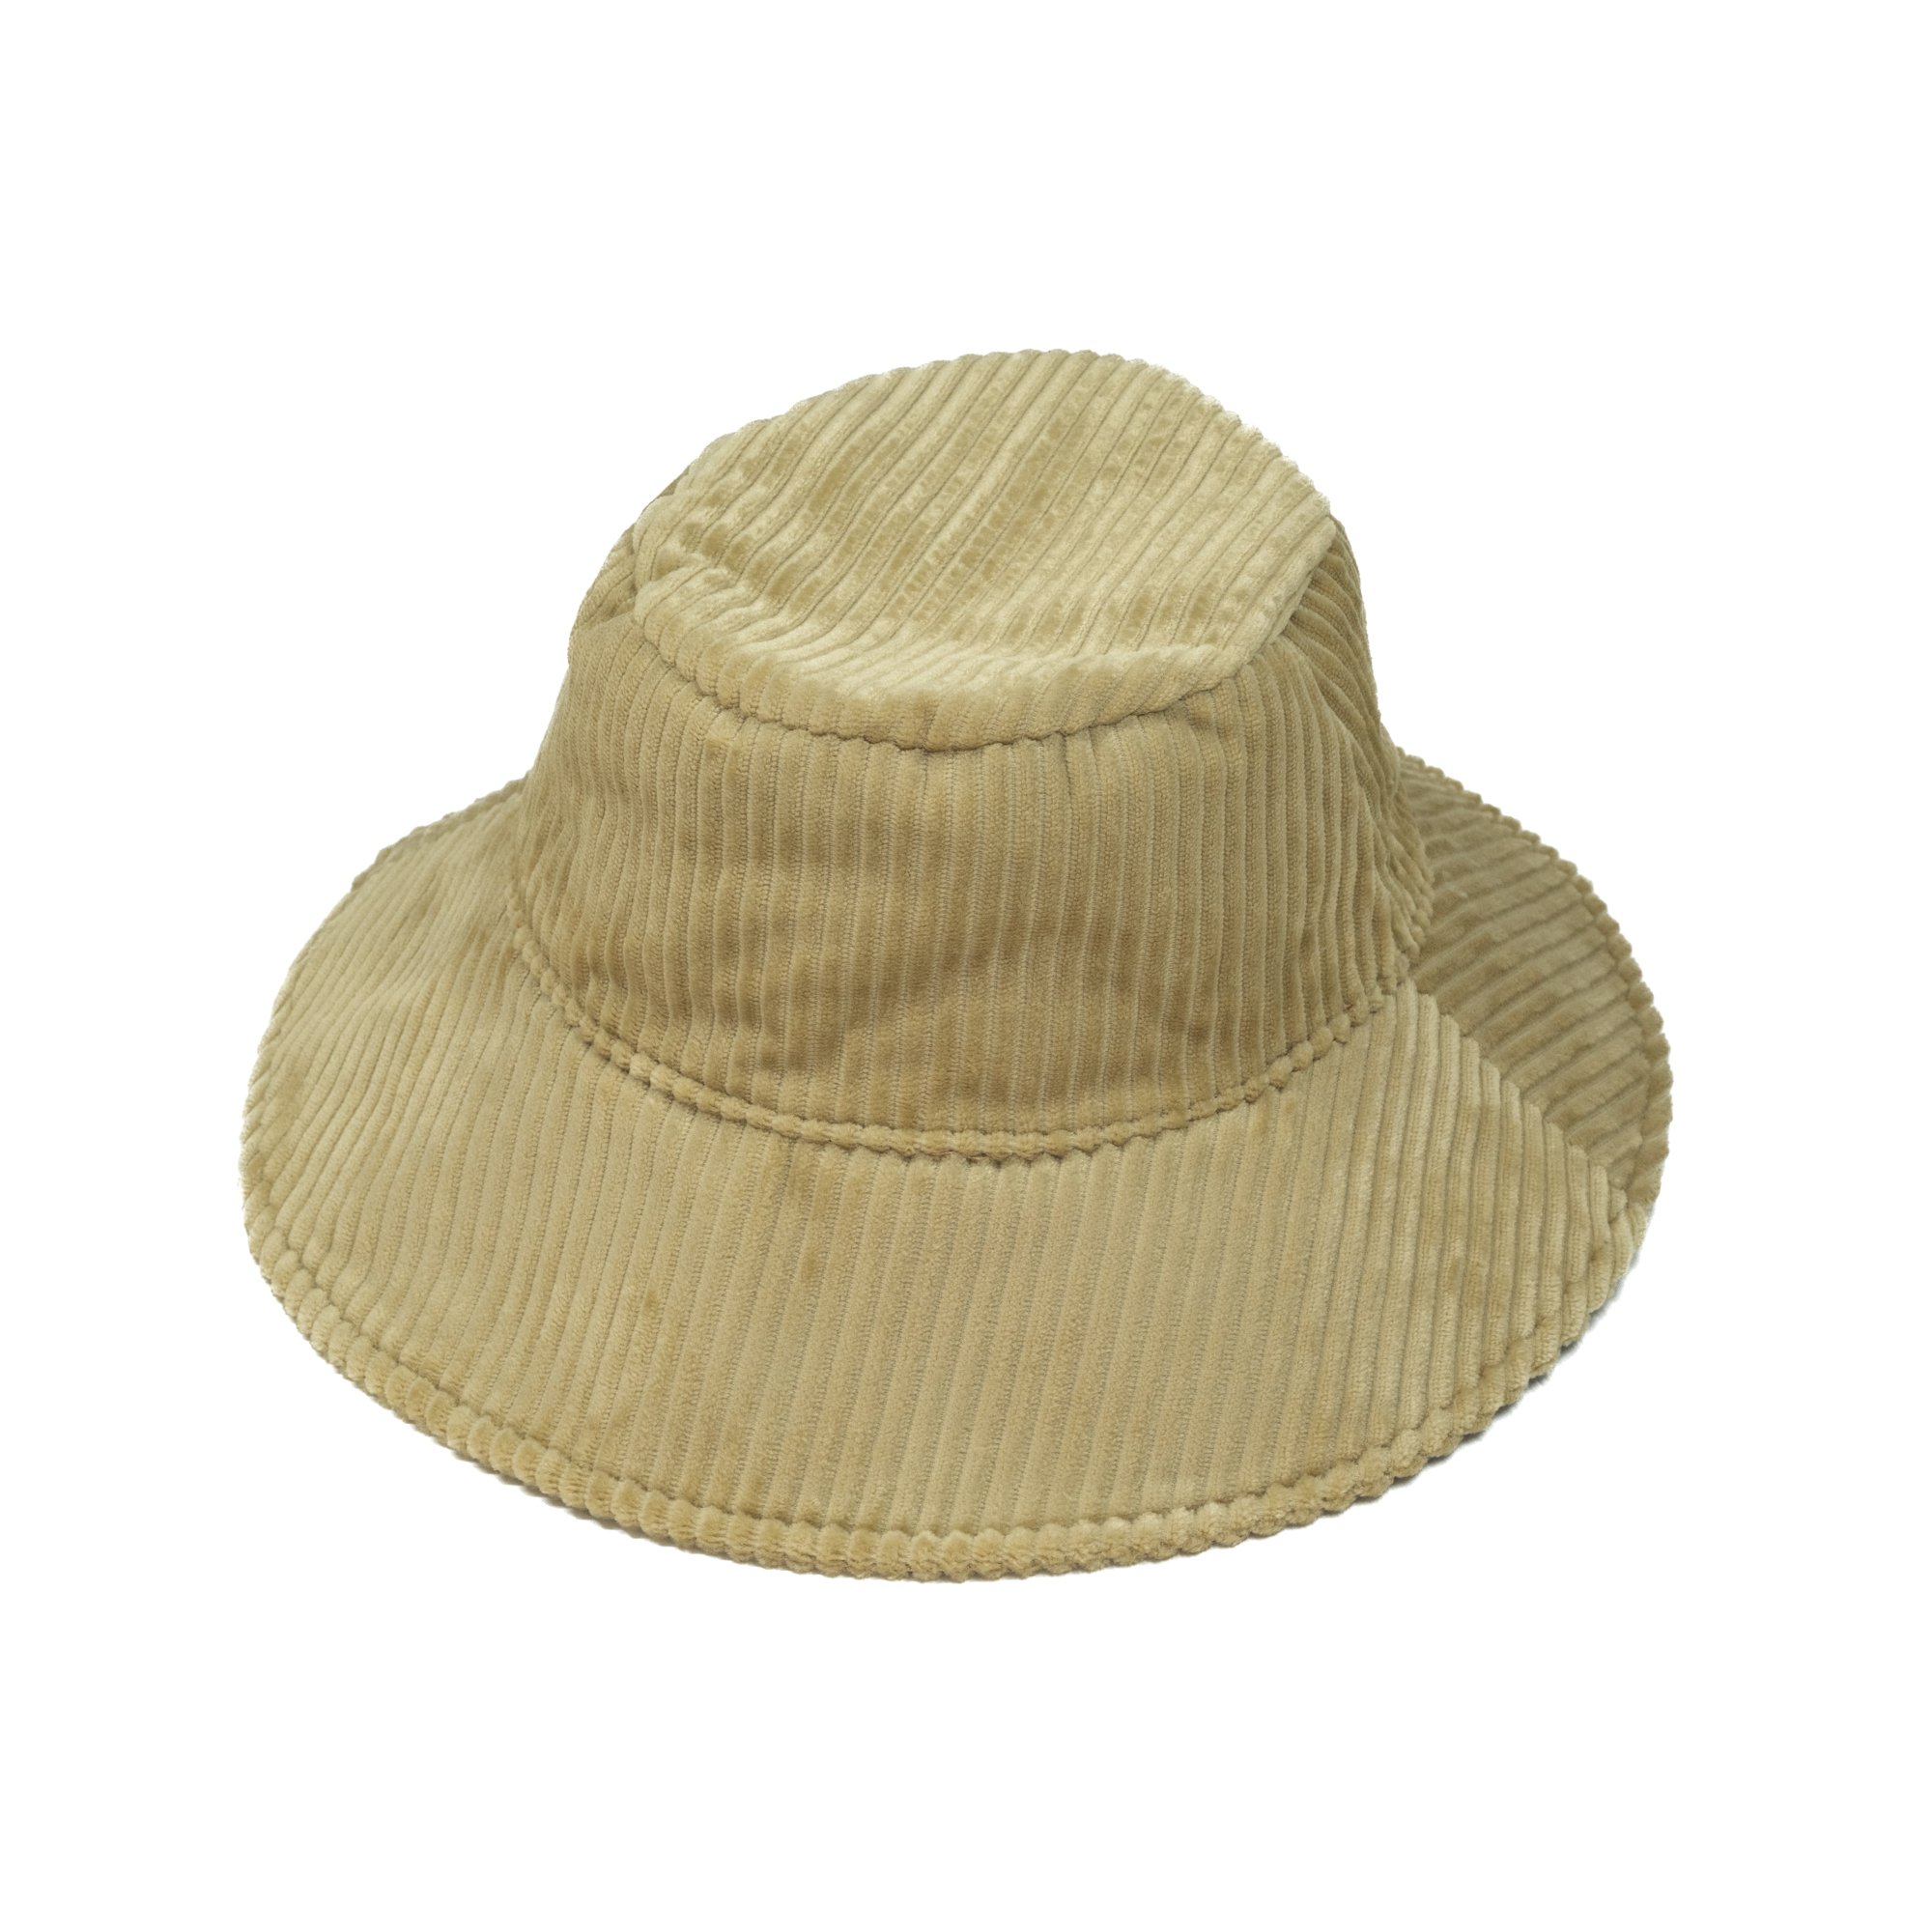 Raspberry Corduroy Cute Bucket Hat